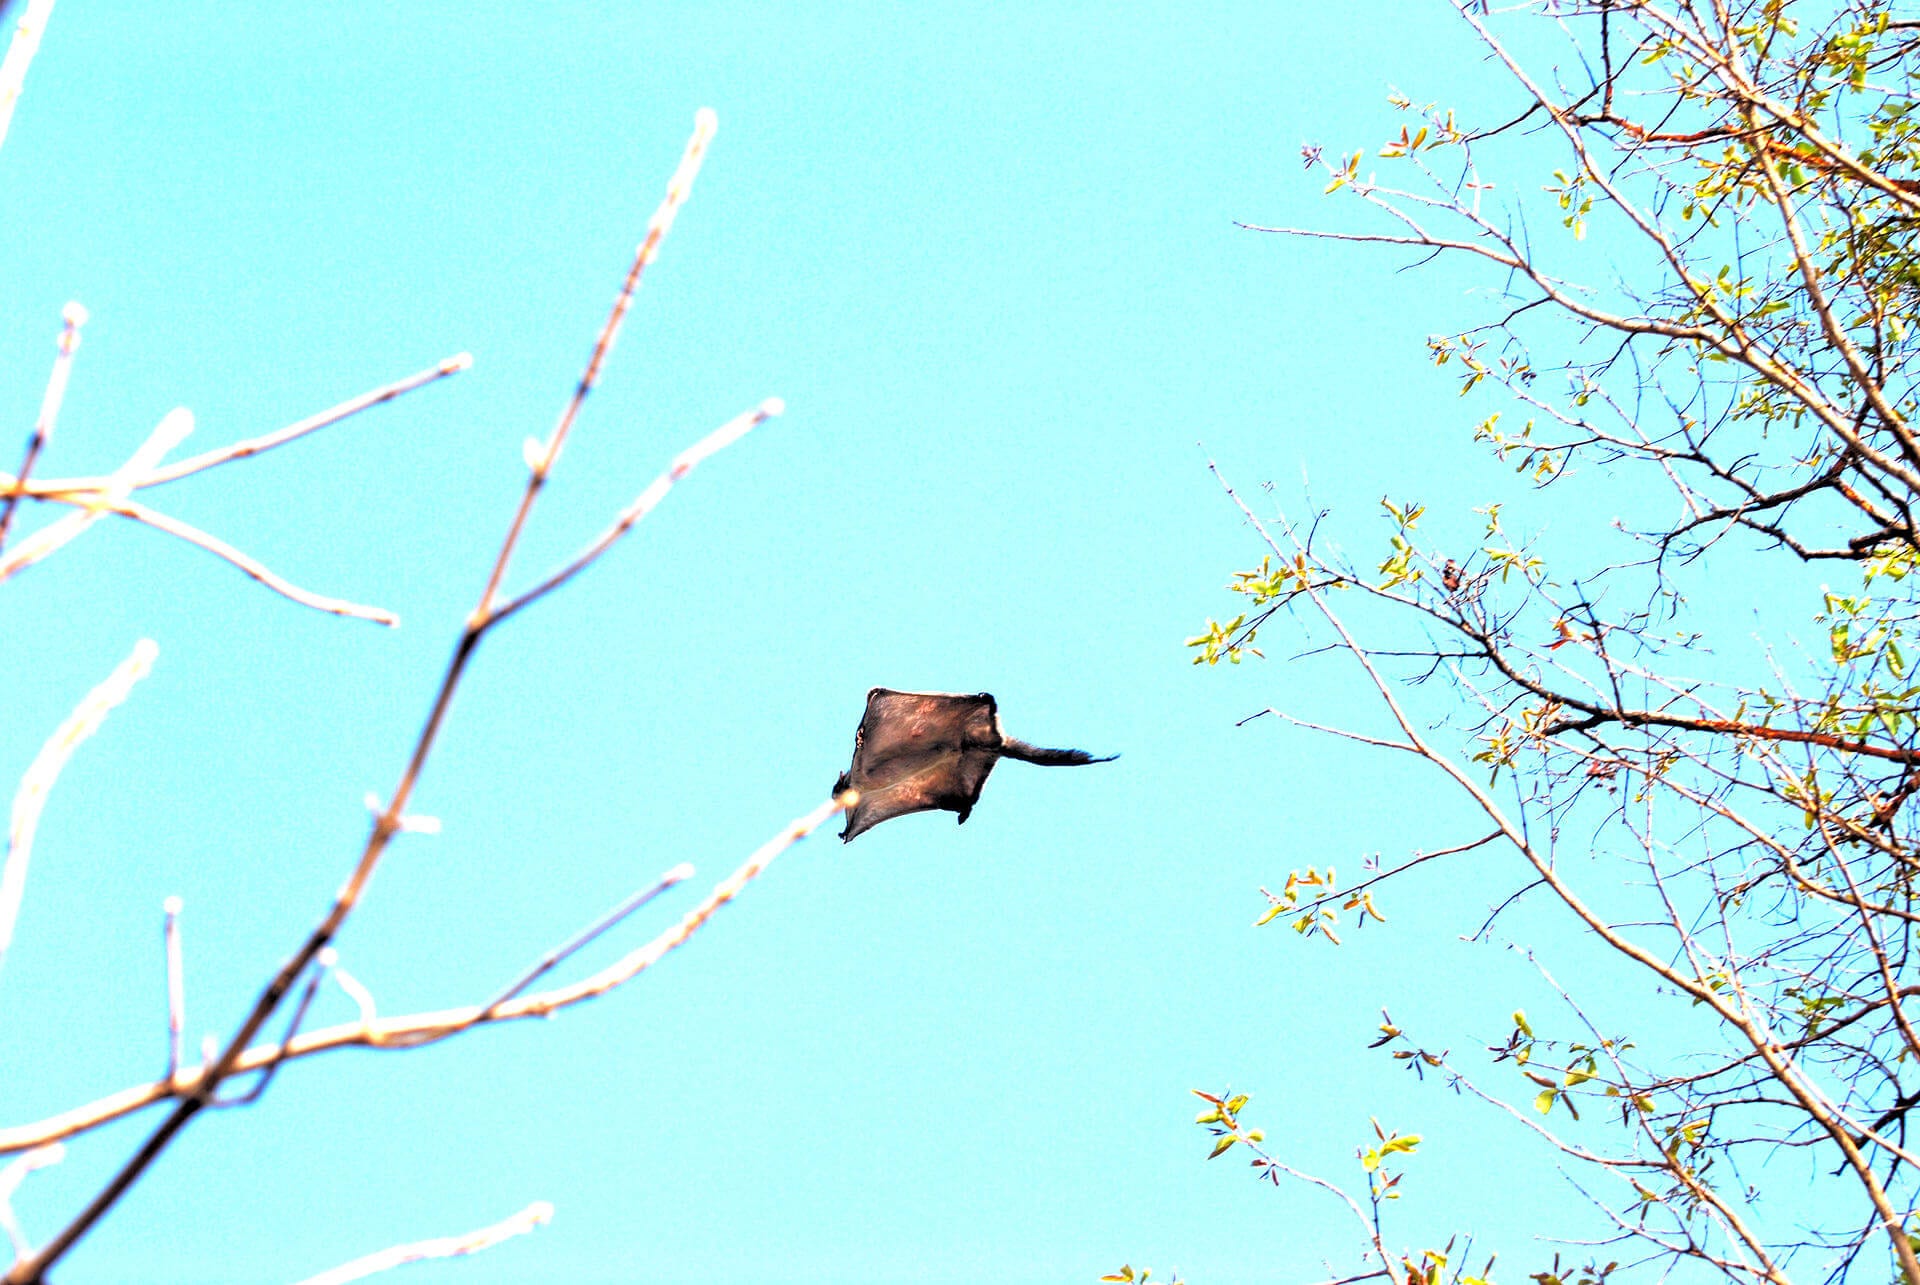 https://en.wikipedia.org/wiki/Flying_squirrel#/media/File:Gliding_flying_squirrel.jpg